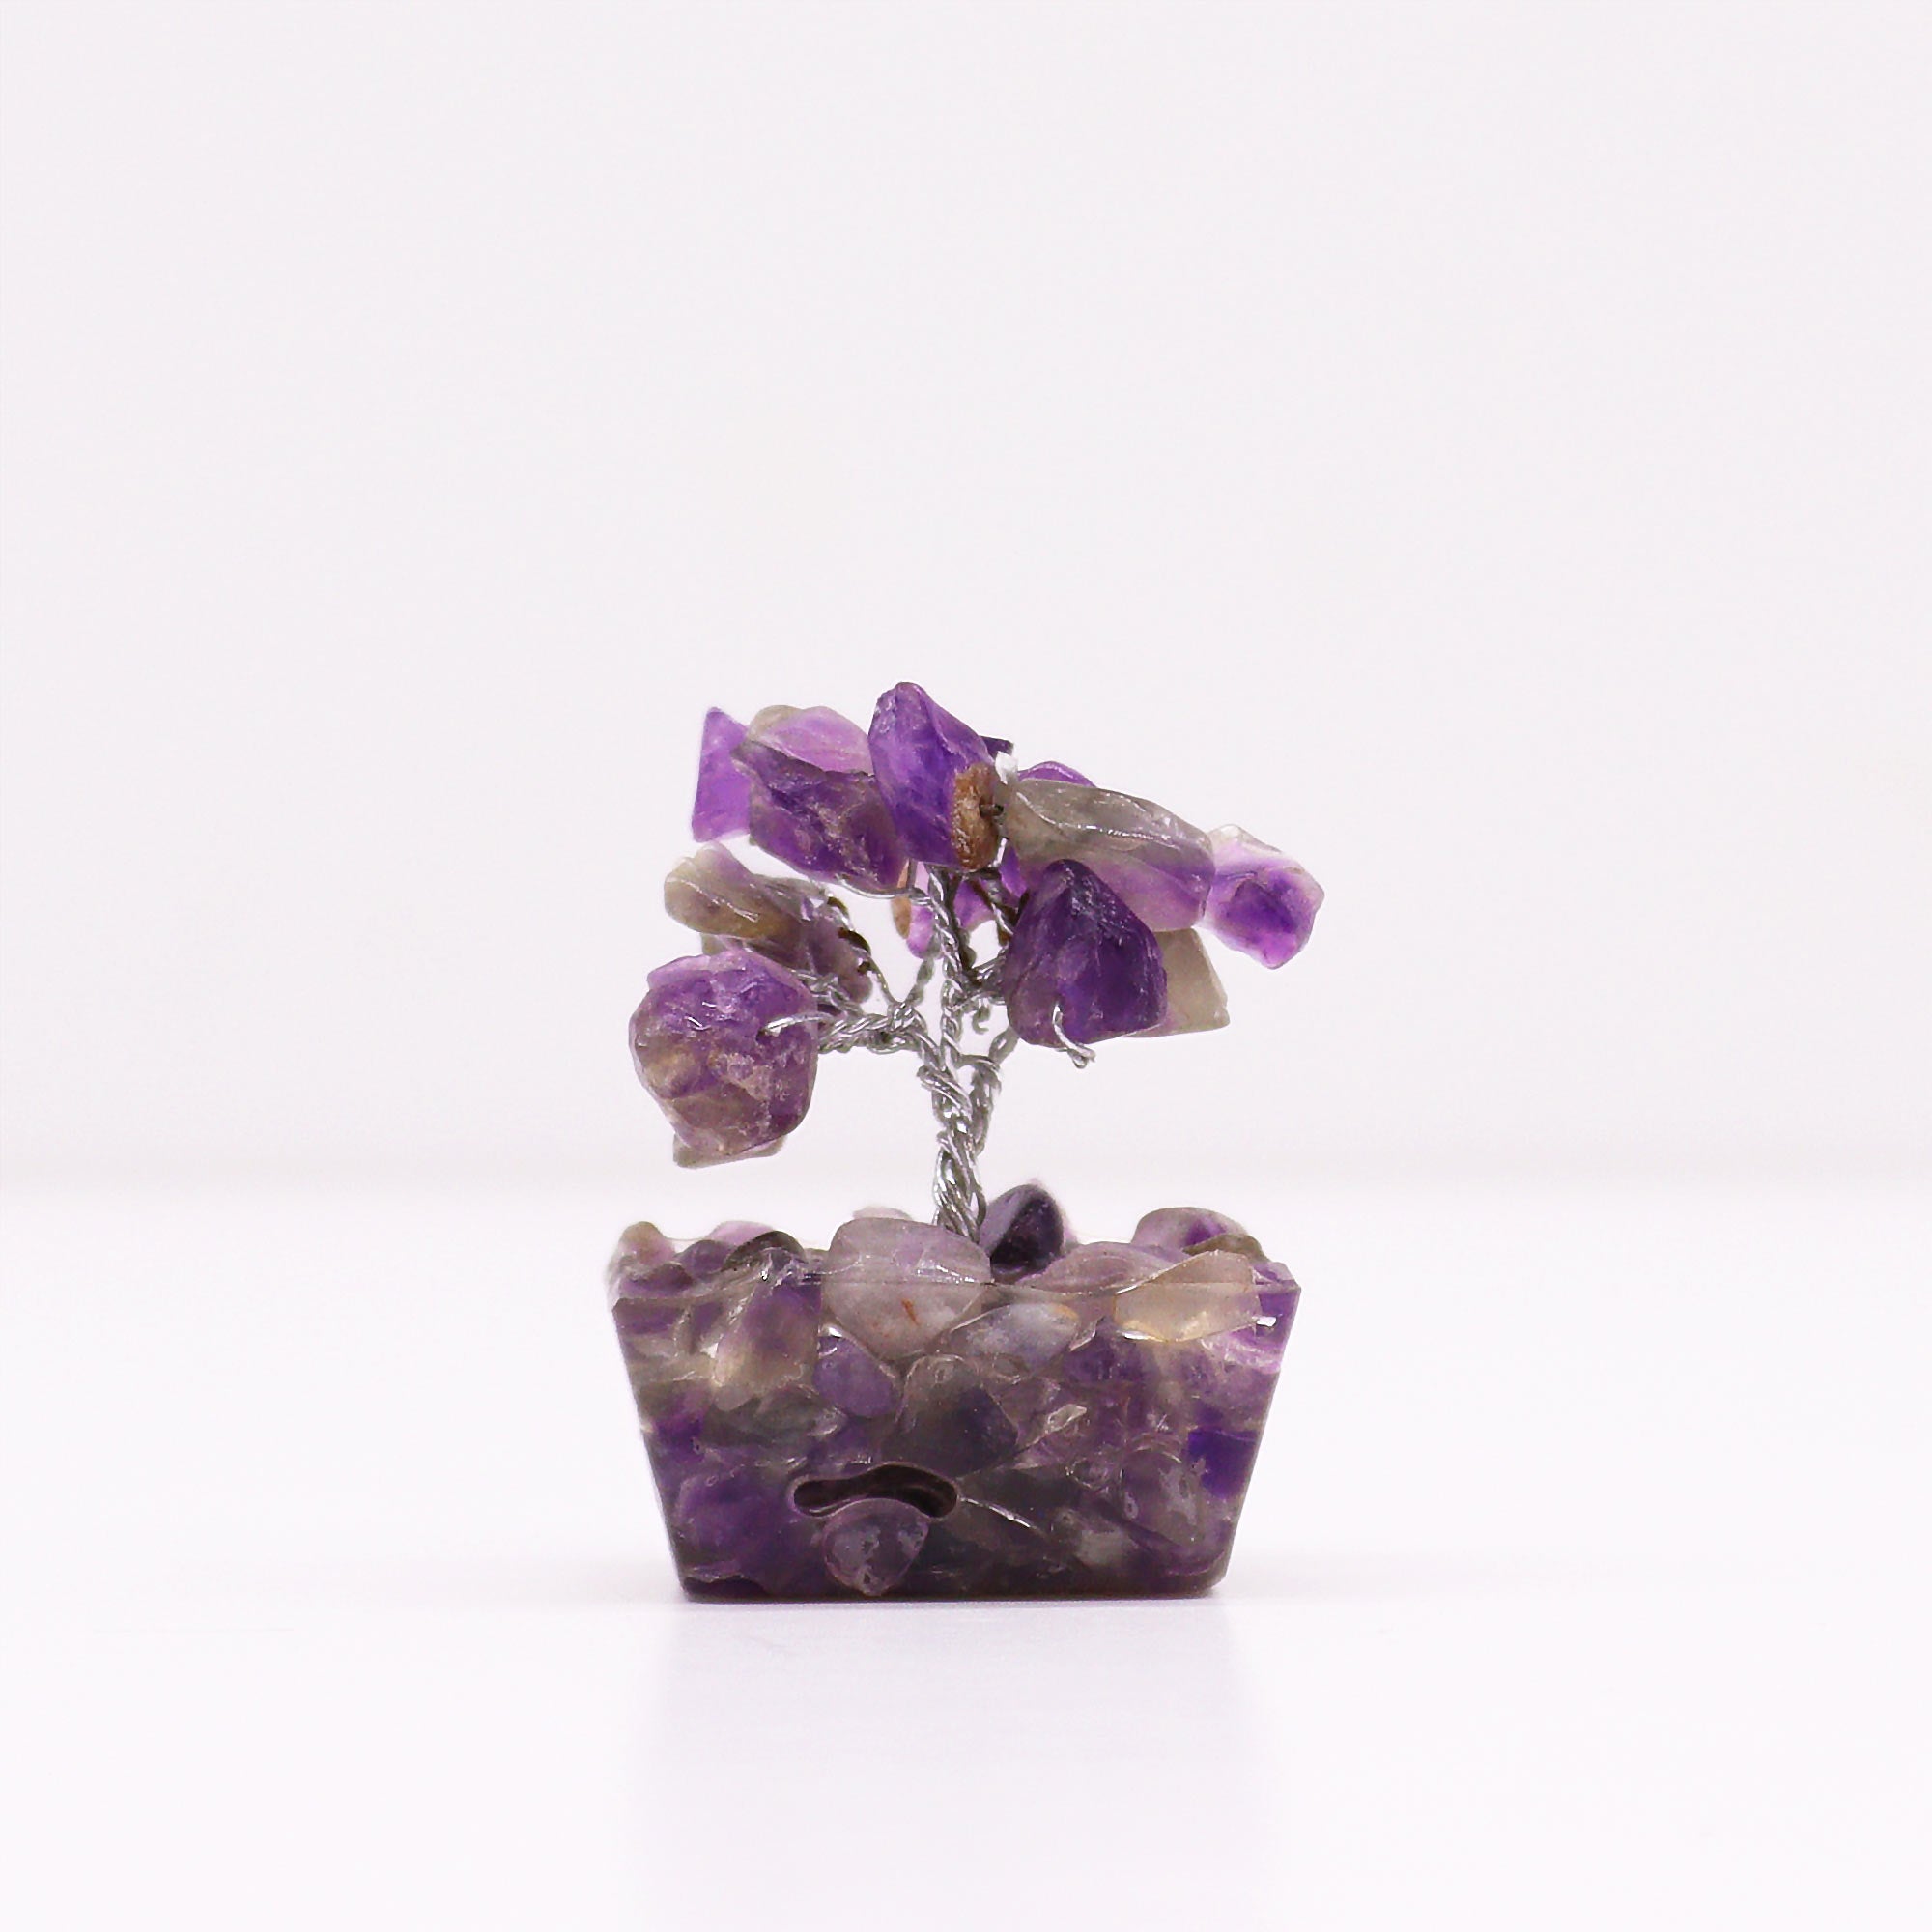 View Mini Gemstone Tree On Orgonite Base Amethyst 15 stones information